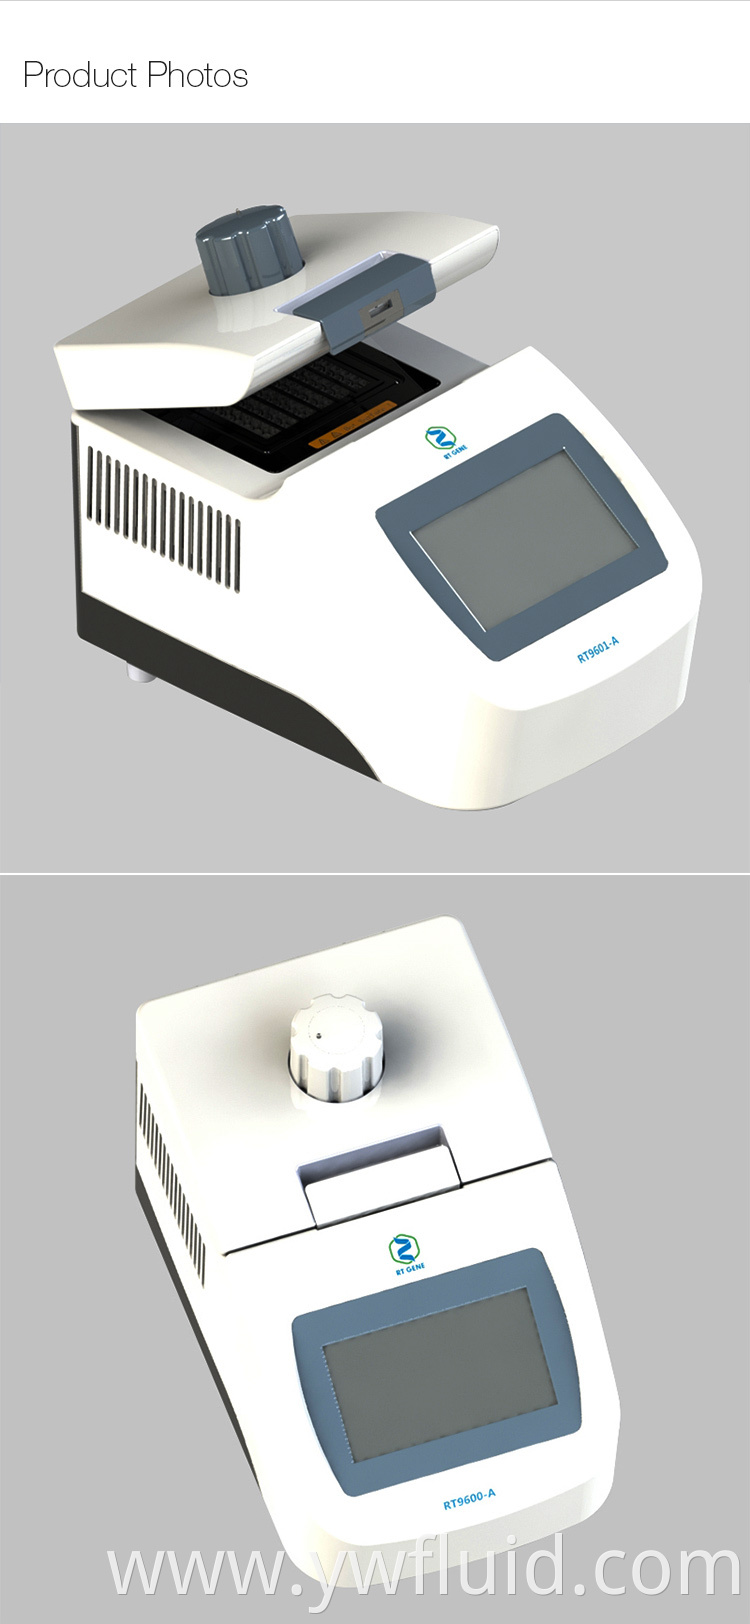 DNA polymerase in PCR machine for lab using test